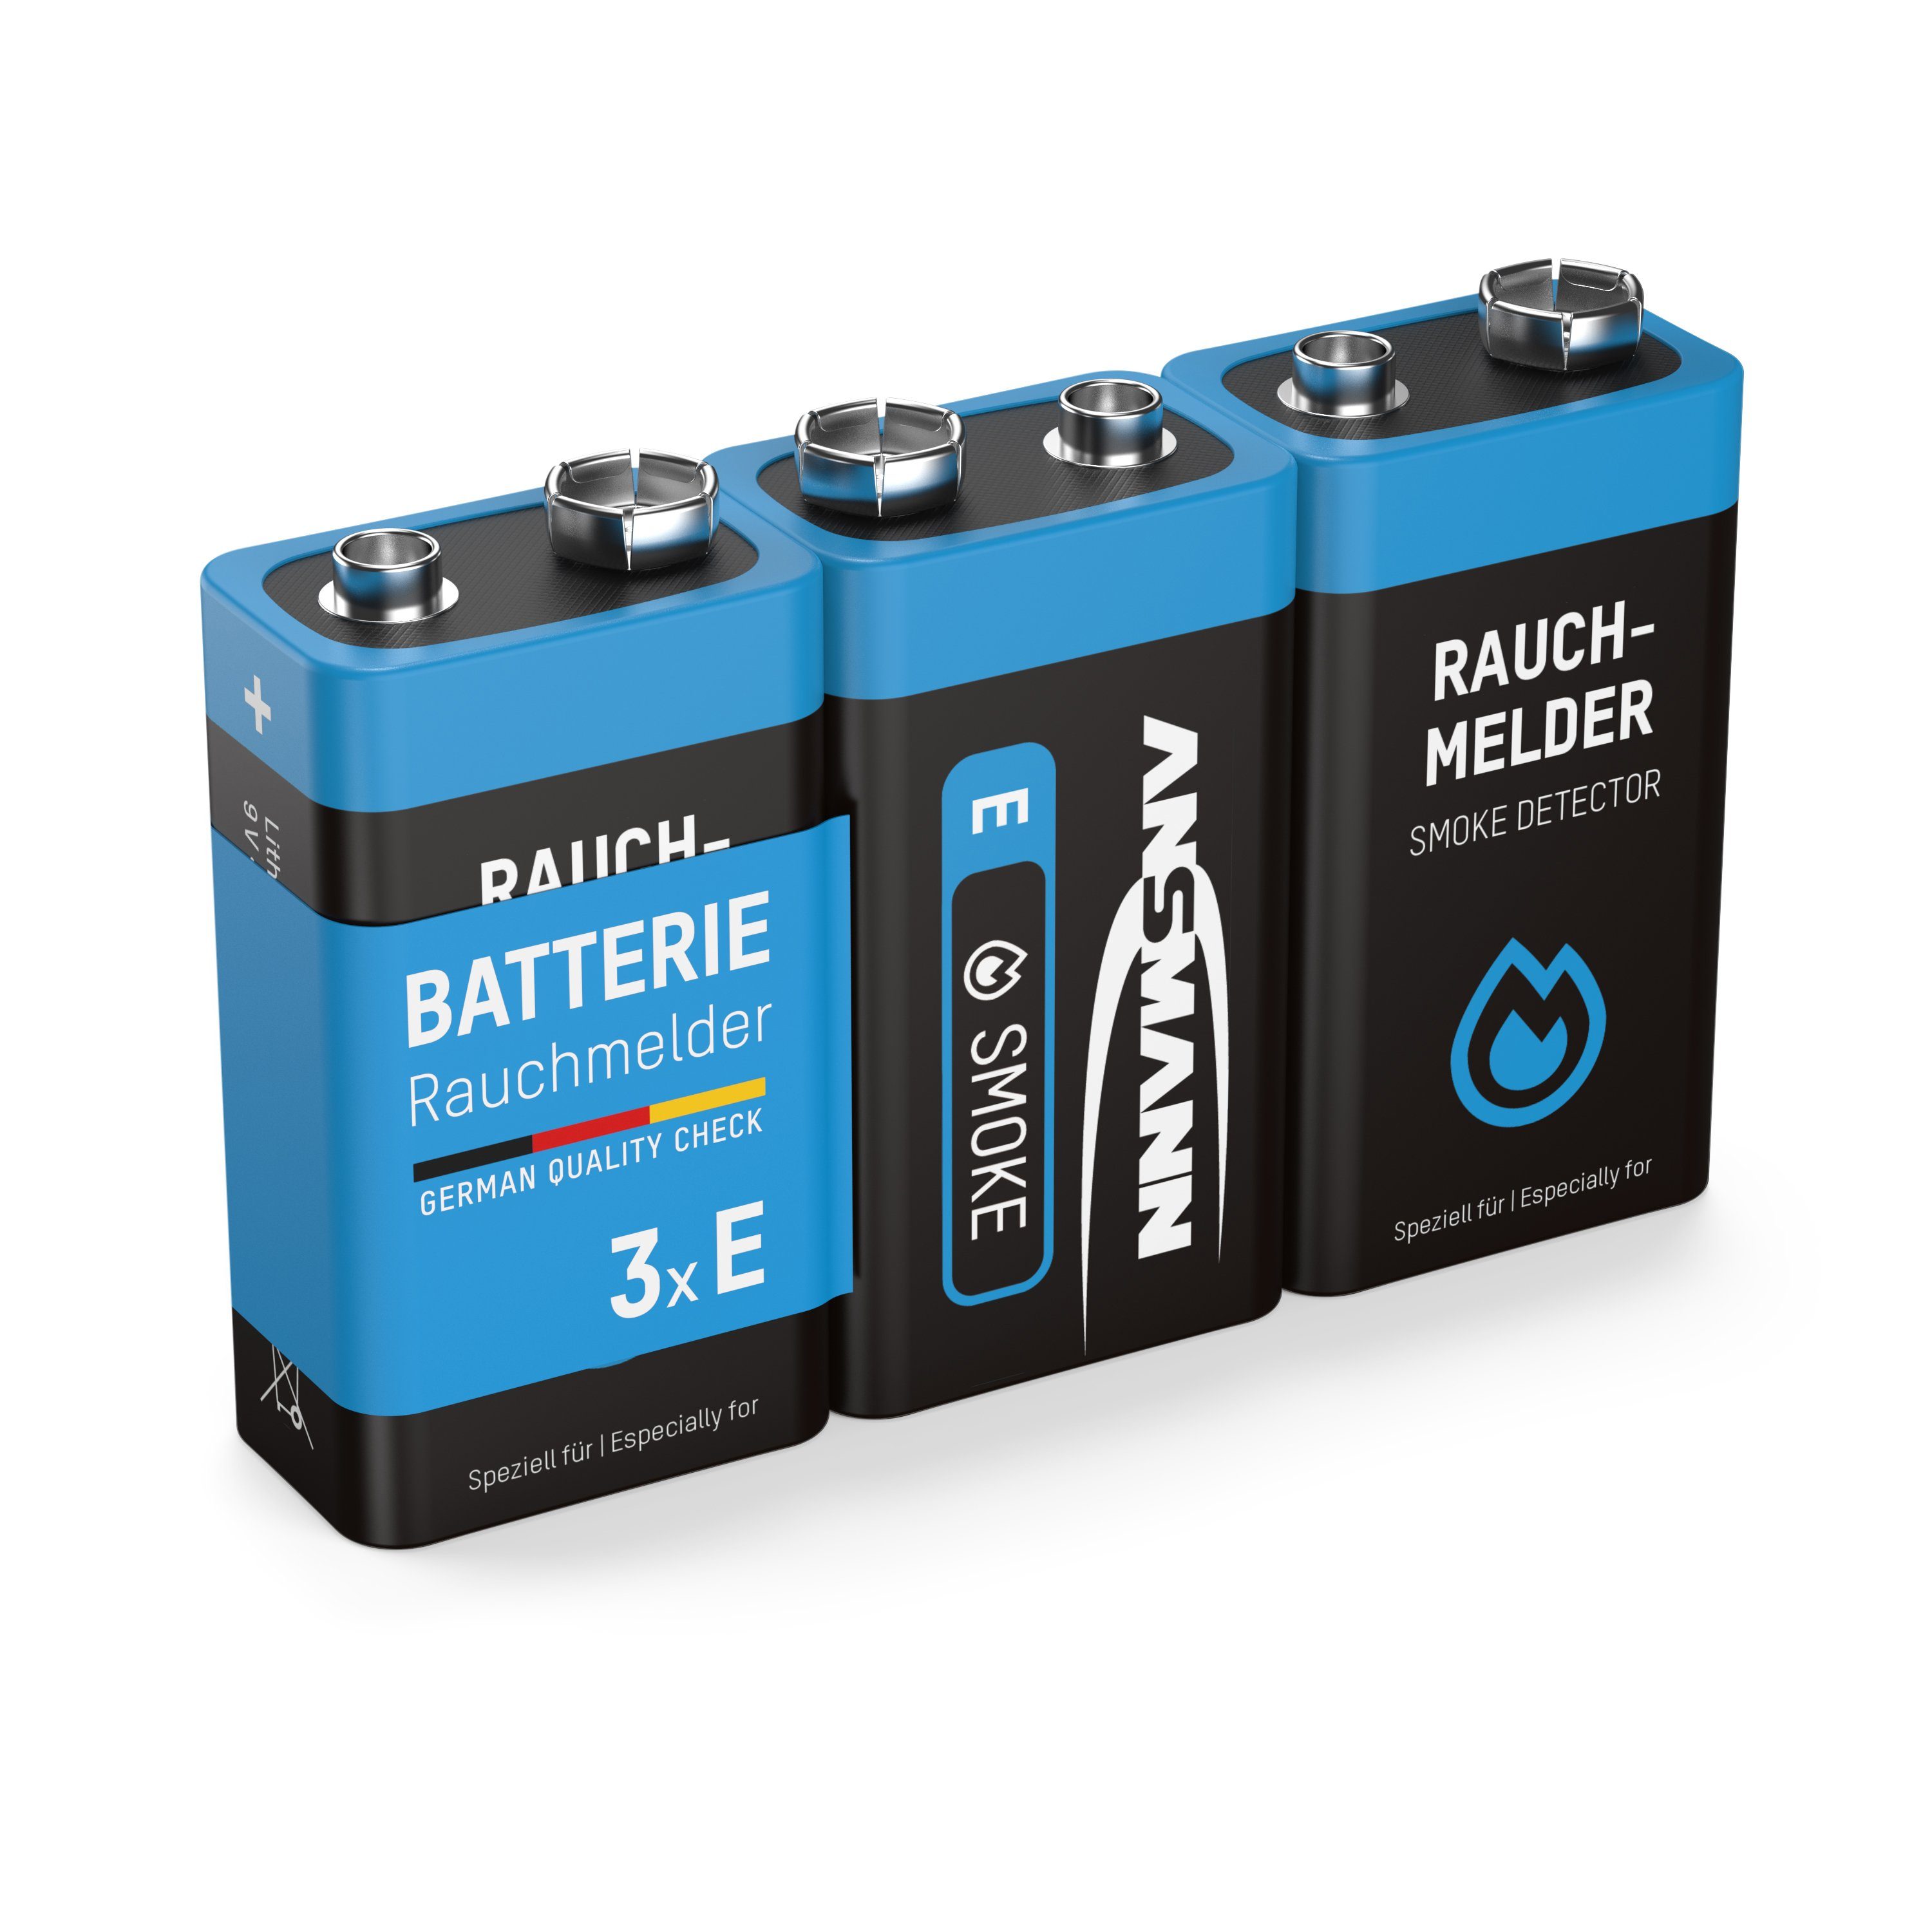 ANSMANN® 3 Lithium longlife Block 9V - Batterie Batterien Qualität Premium Rauchmelder